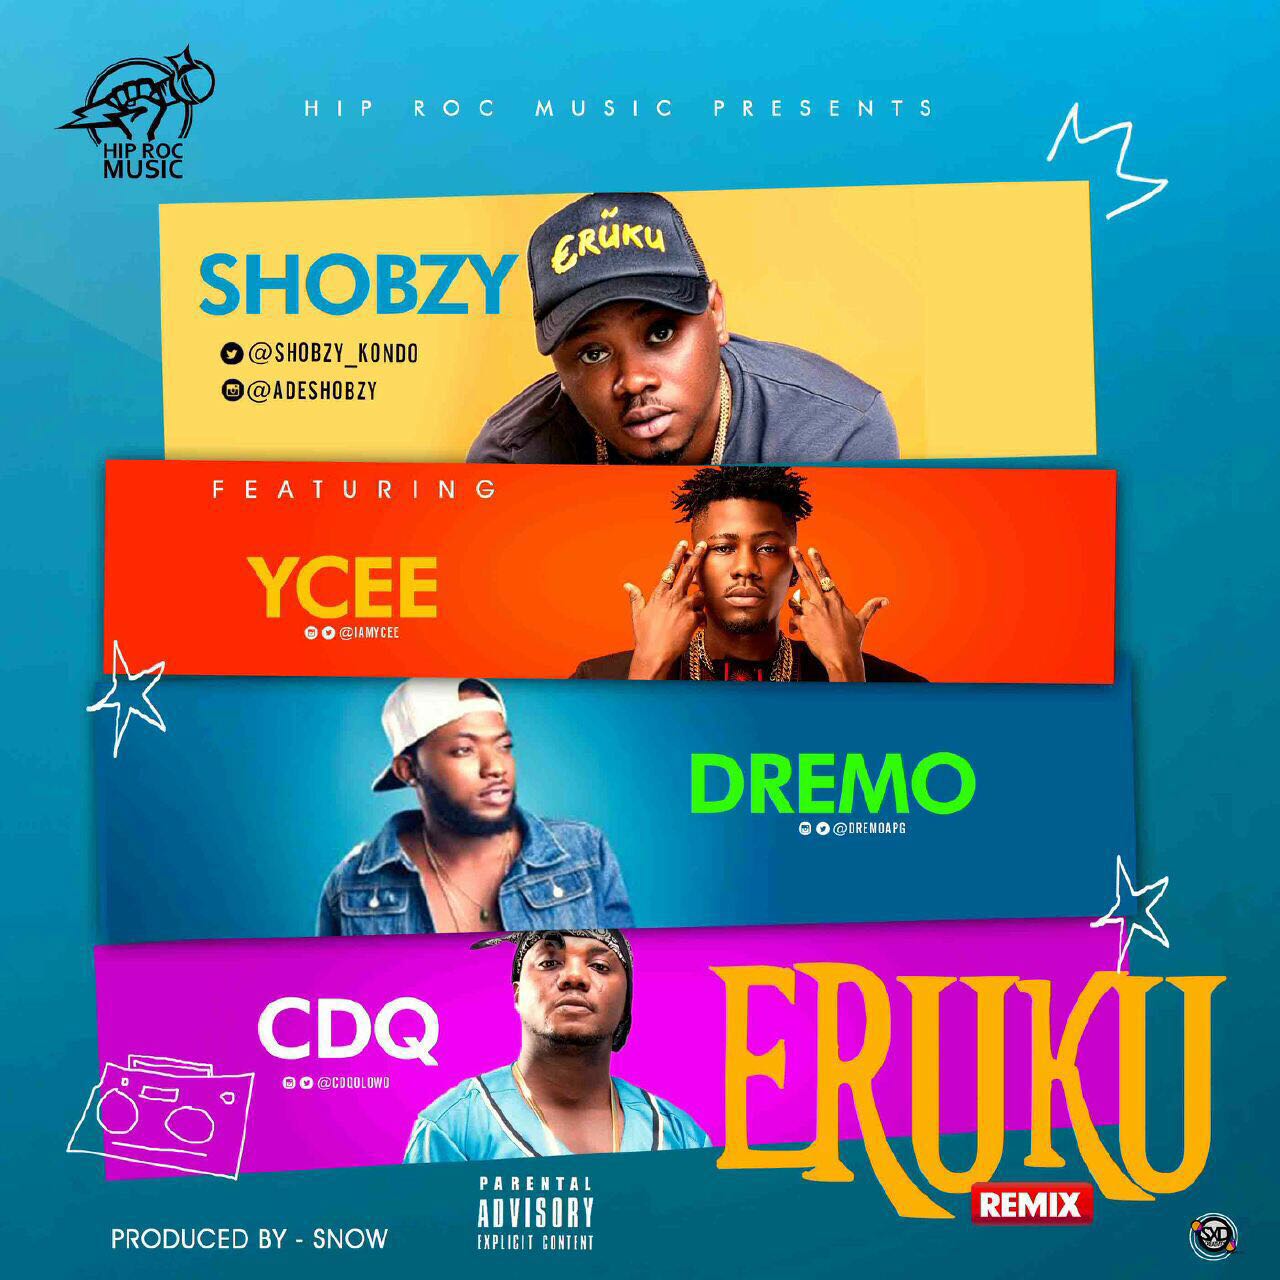 VIDEO: Shobzy – Eruku (Remix) ft. Ycee, CDQ & Dremo